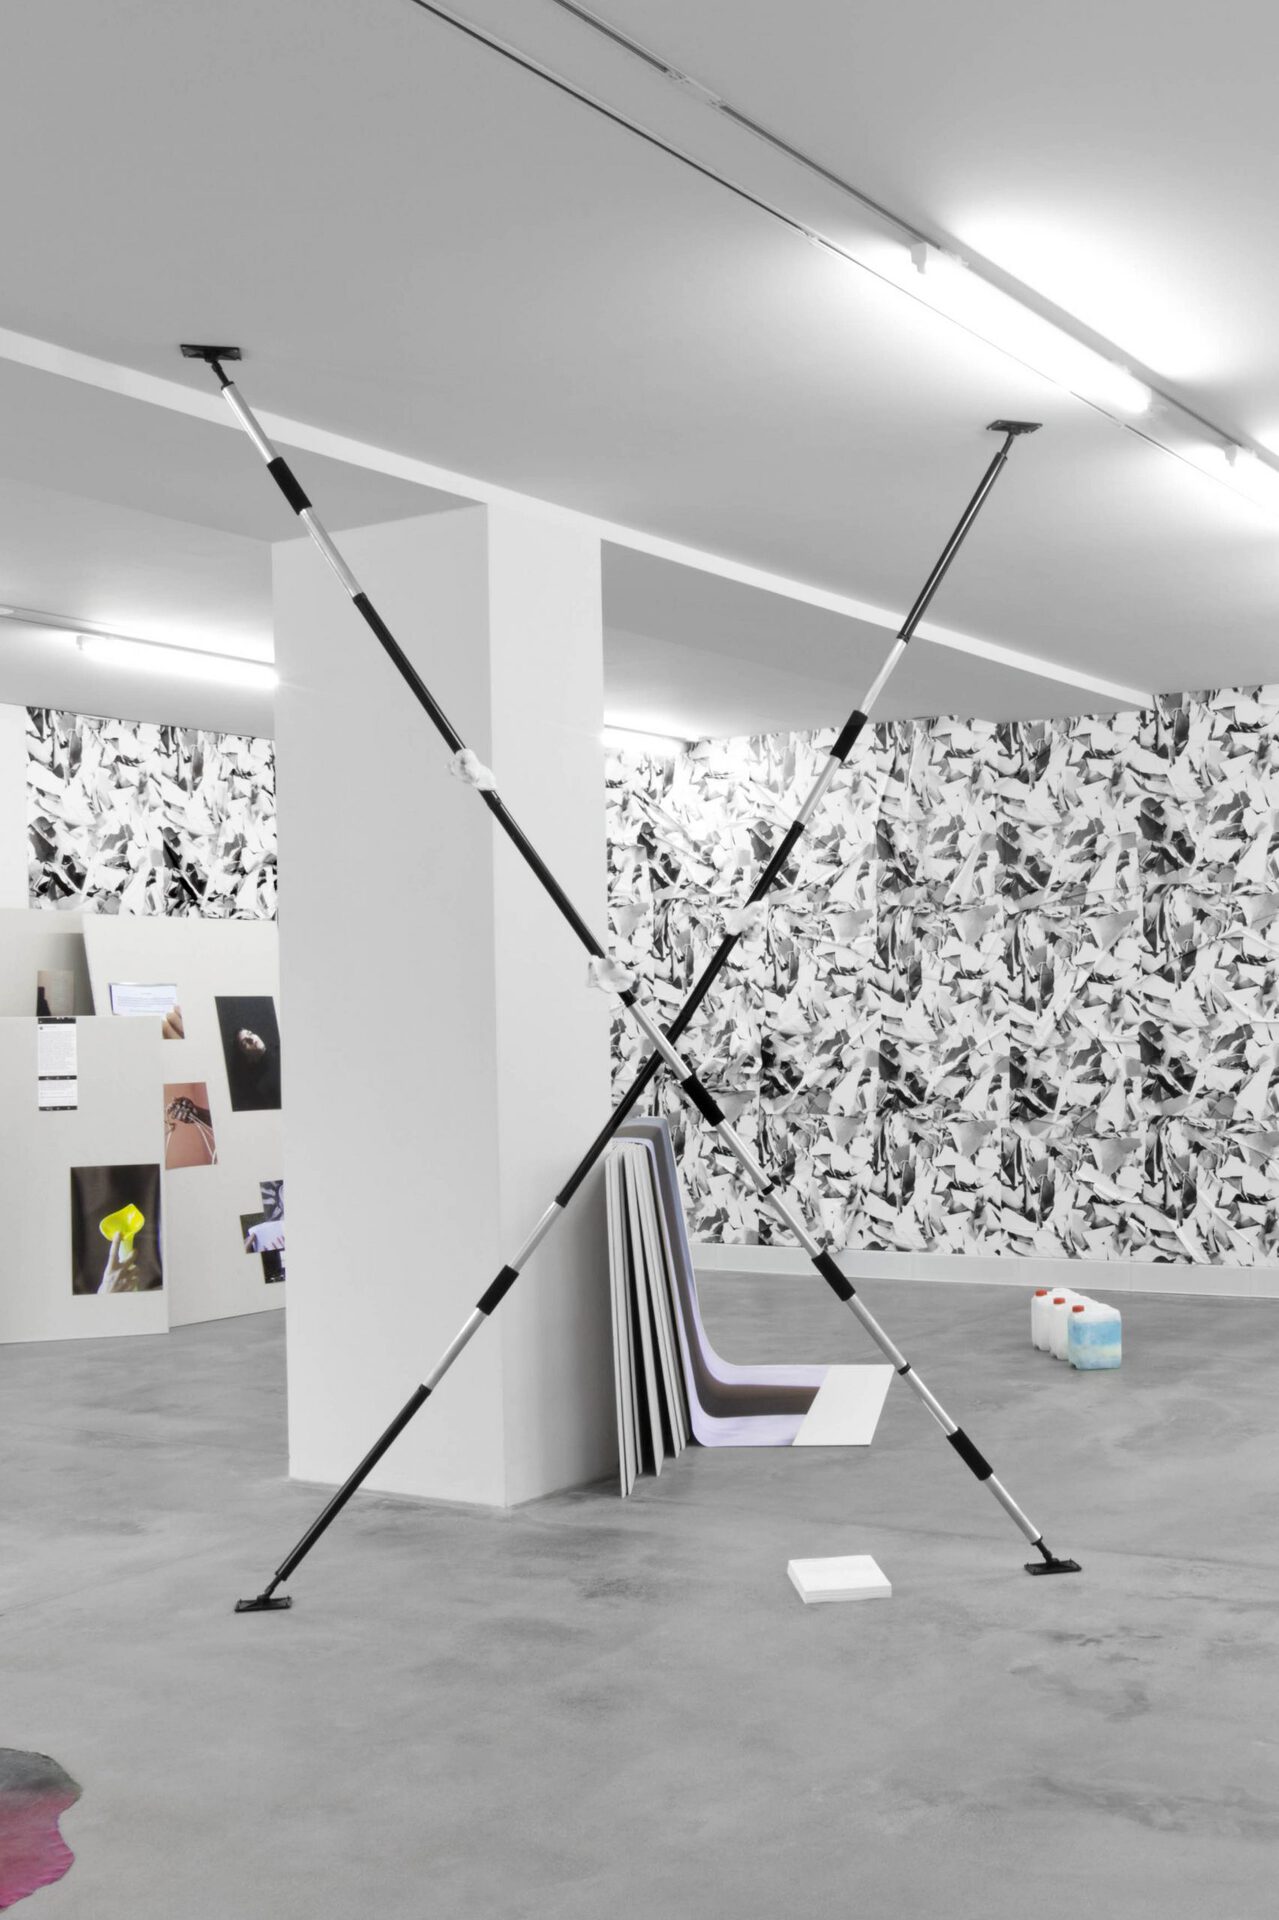 Katarína Dubovská ‚UPATEOA_hybrid (Image Mass, Moulded)‘ image fragments, synthetic material, tensioners, 360 x 360 cm, 2018/2019